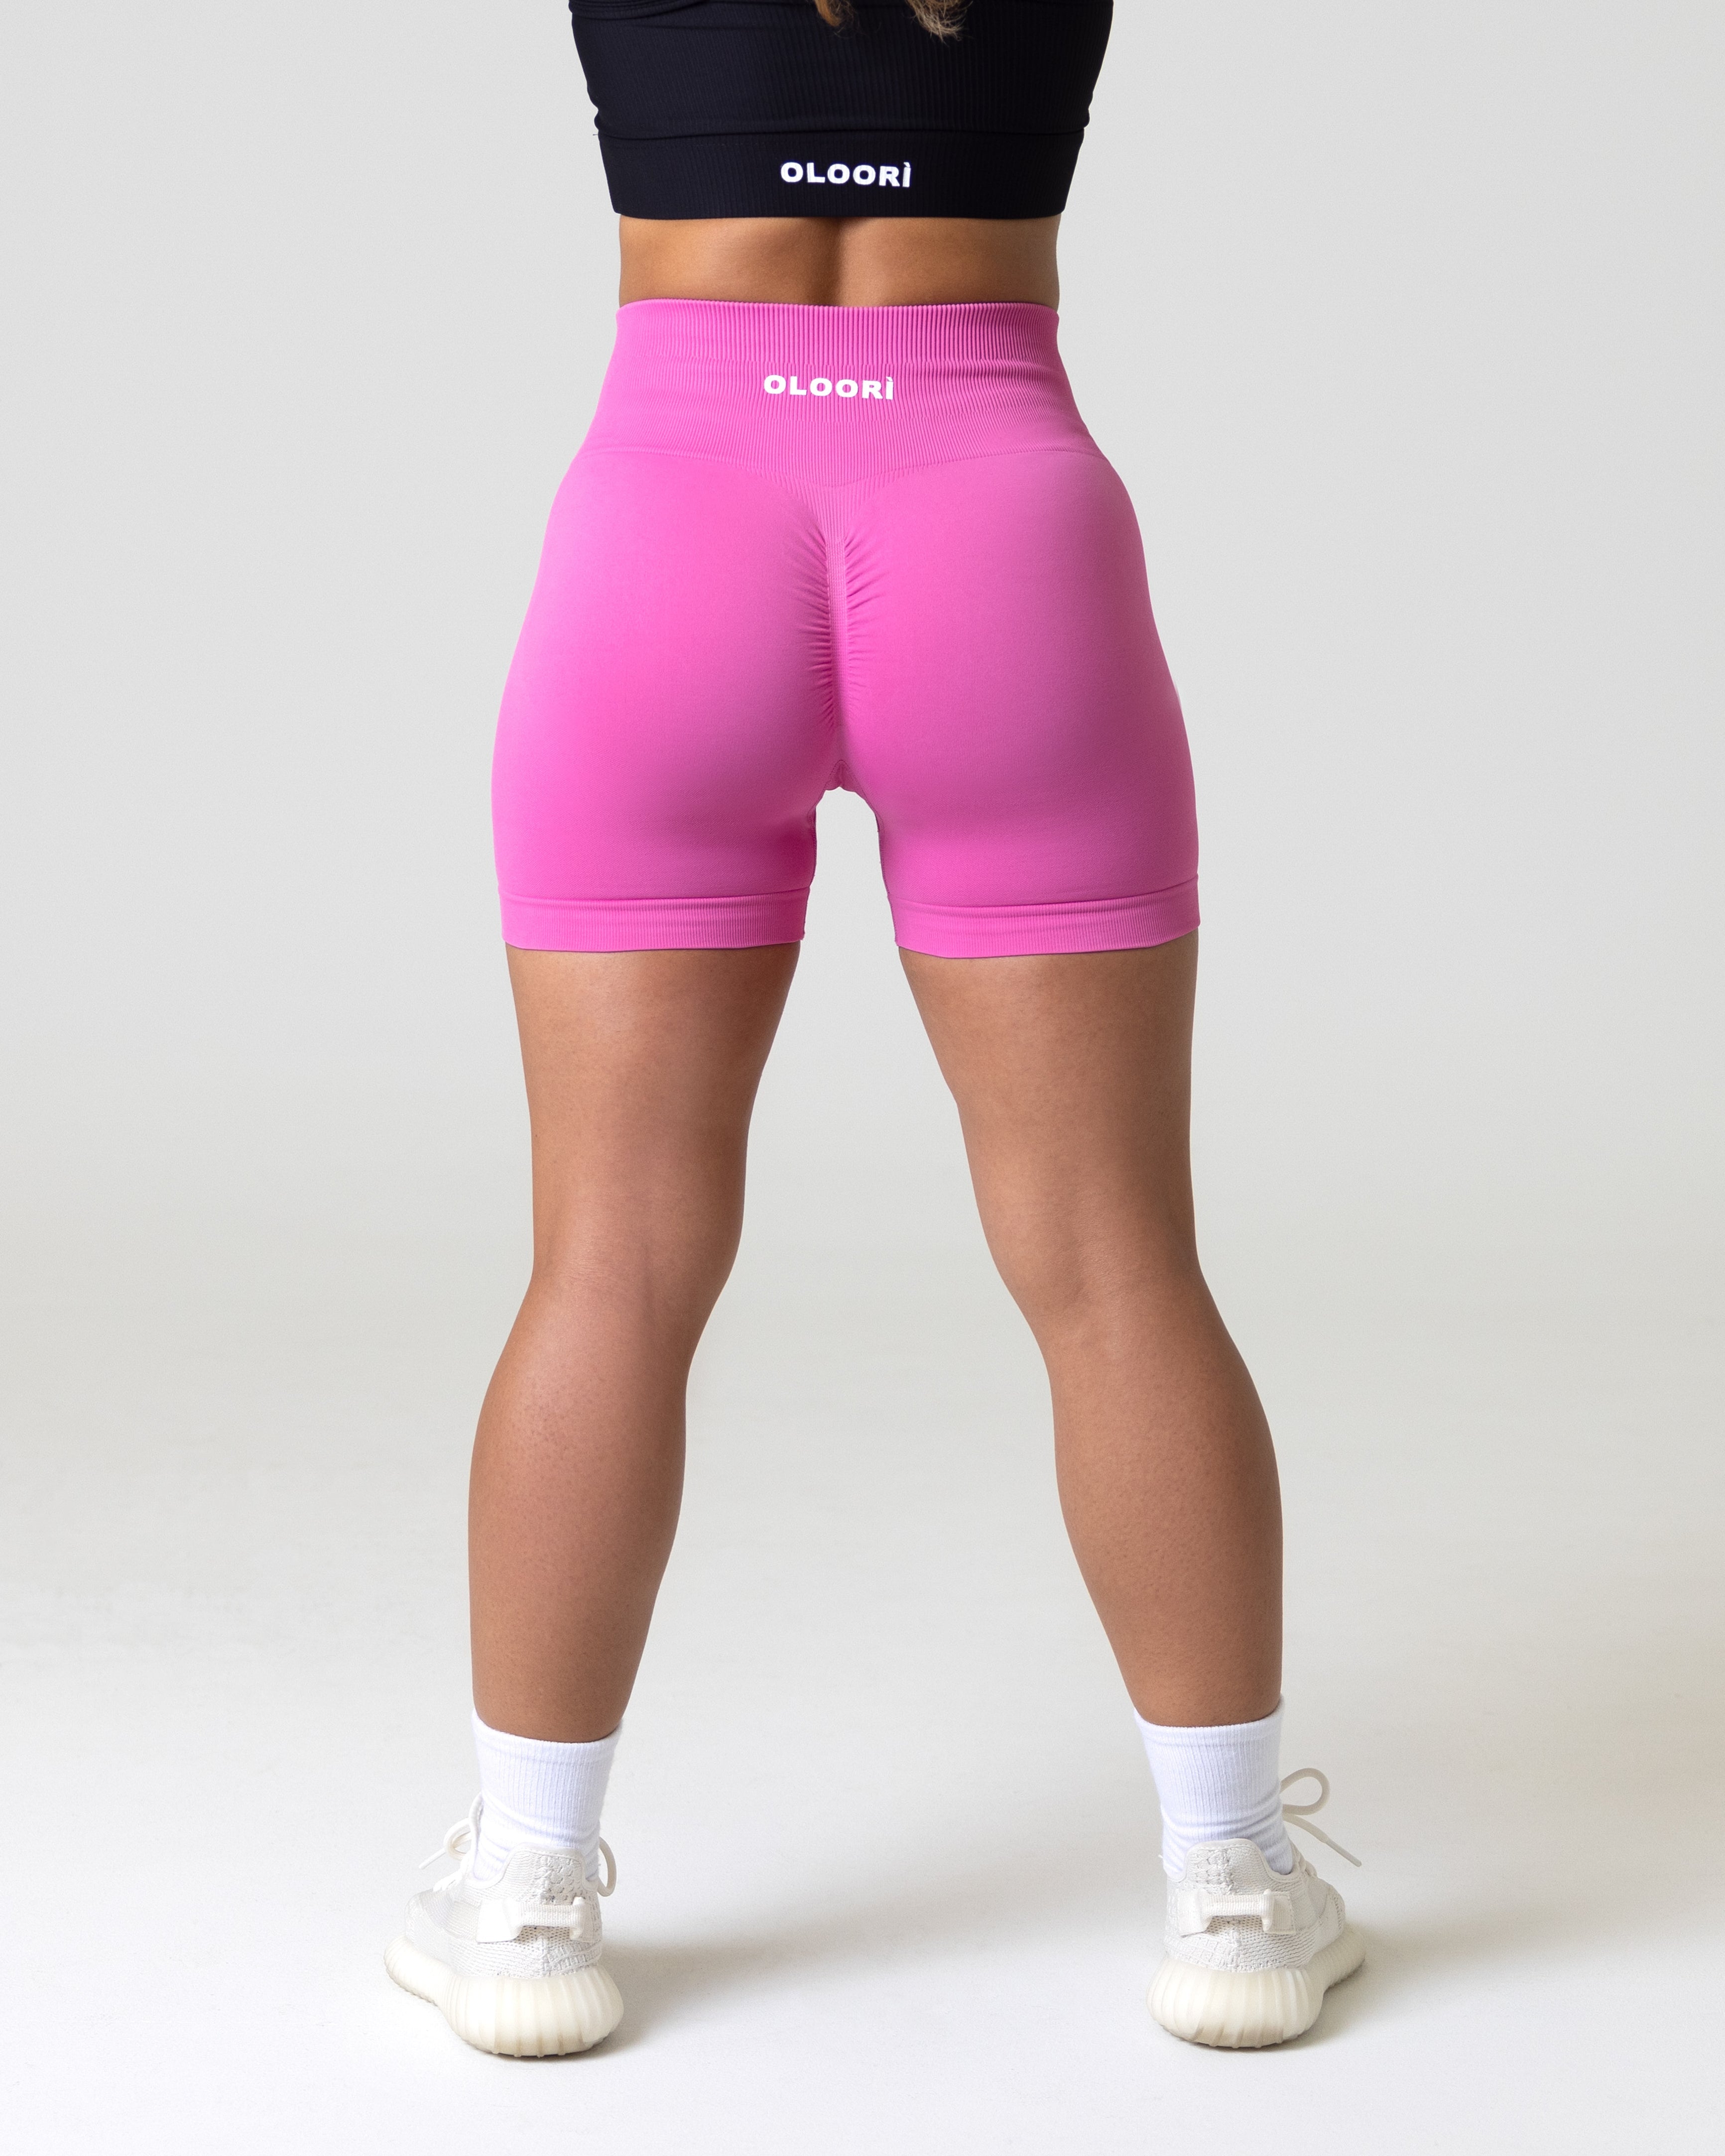 Best Workout Shorts for Women - CNET